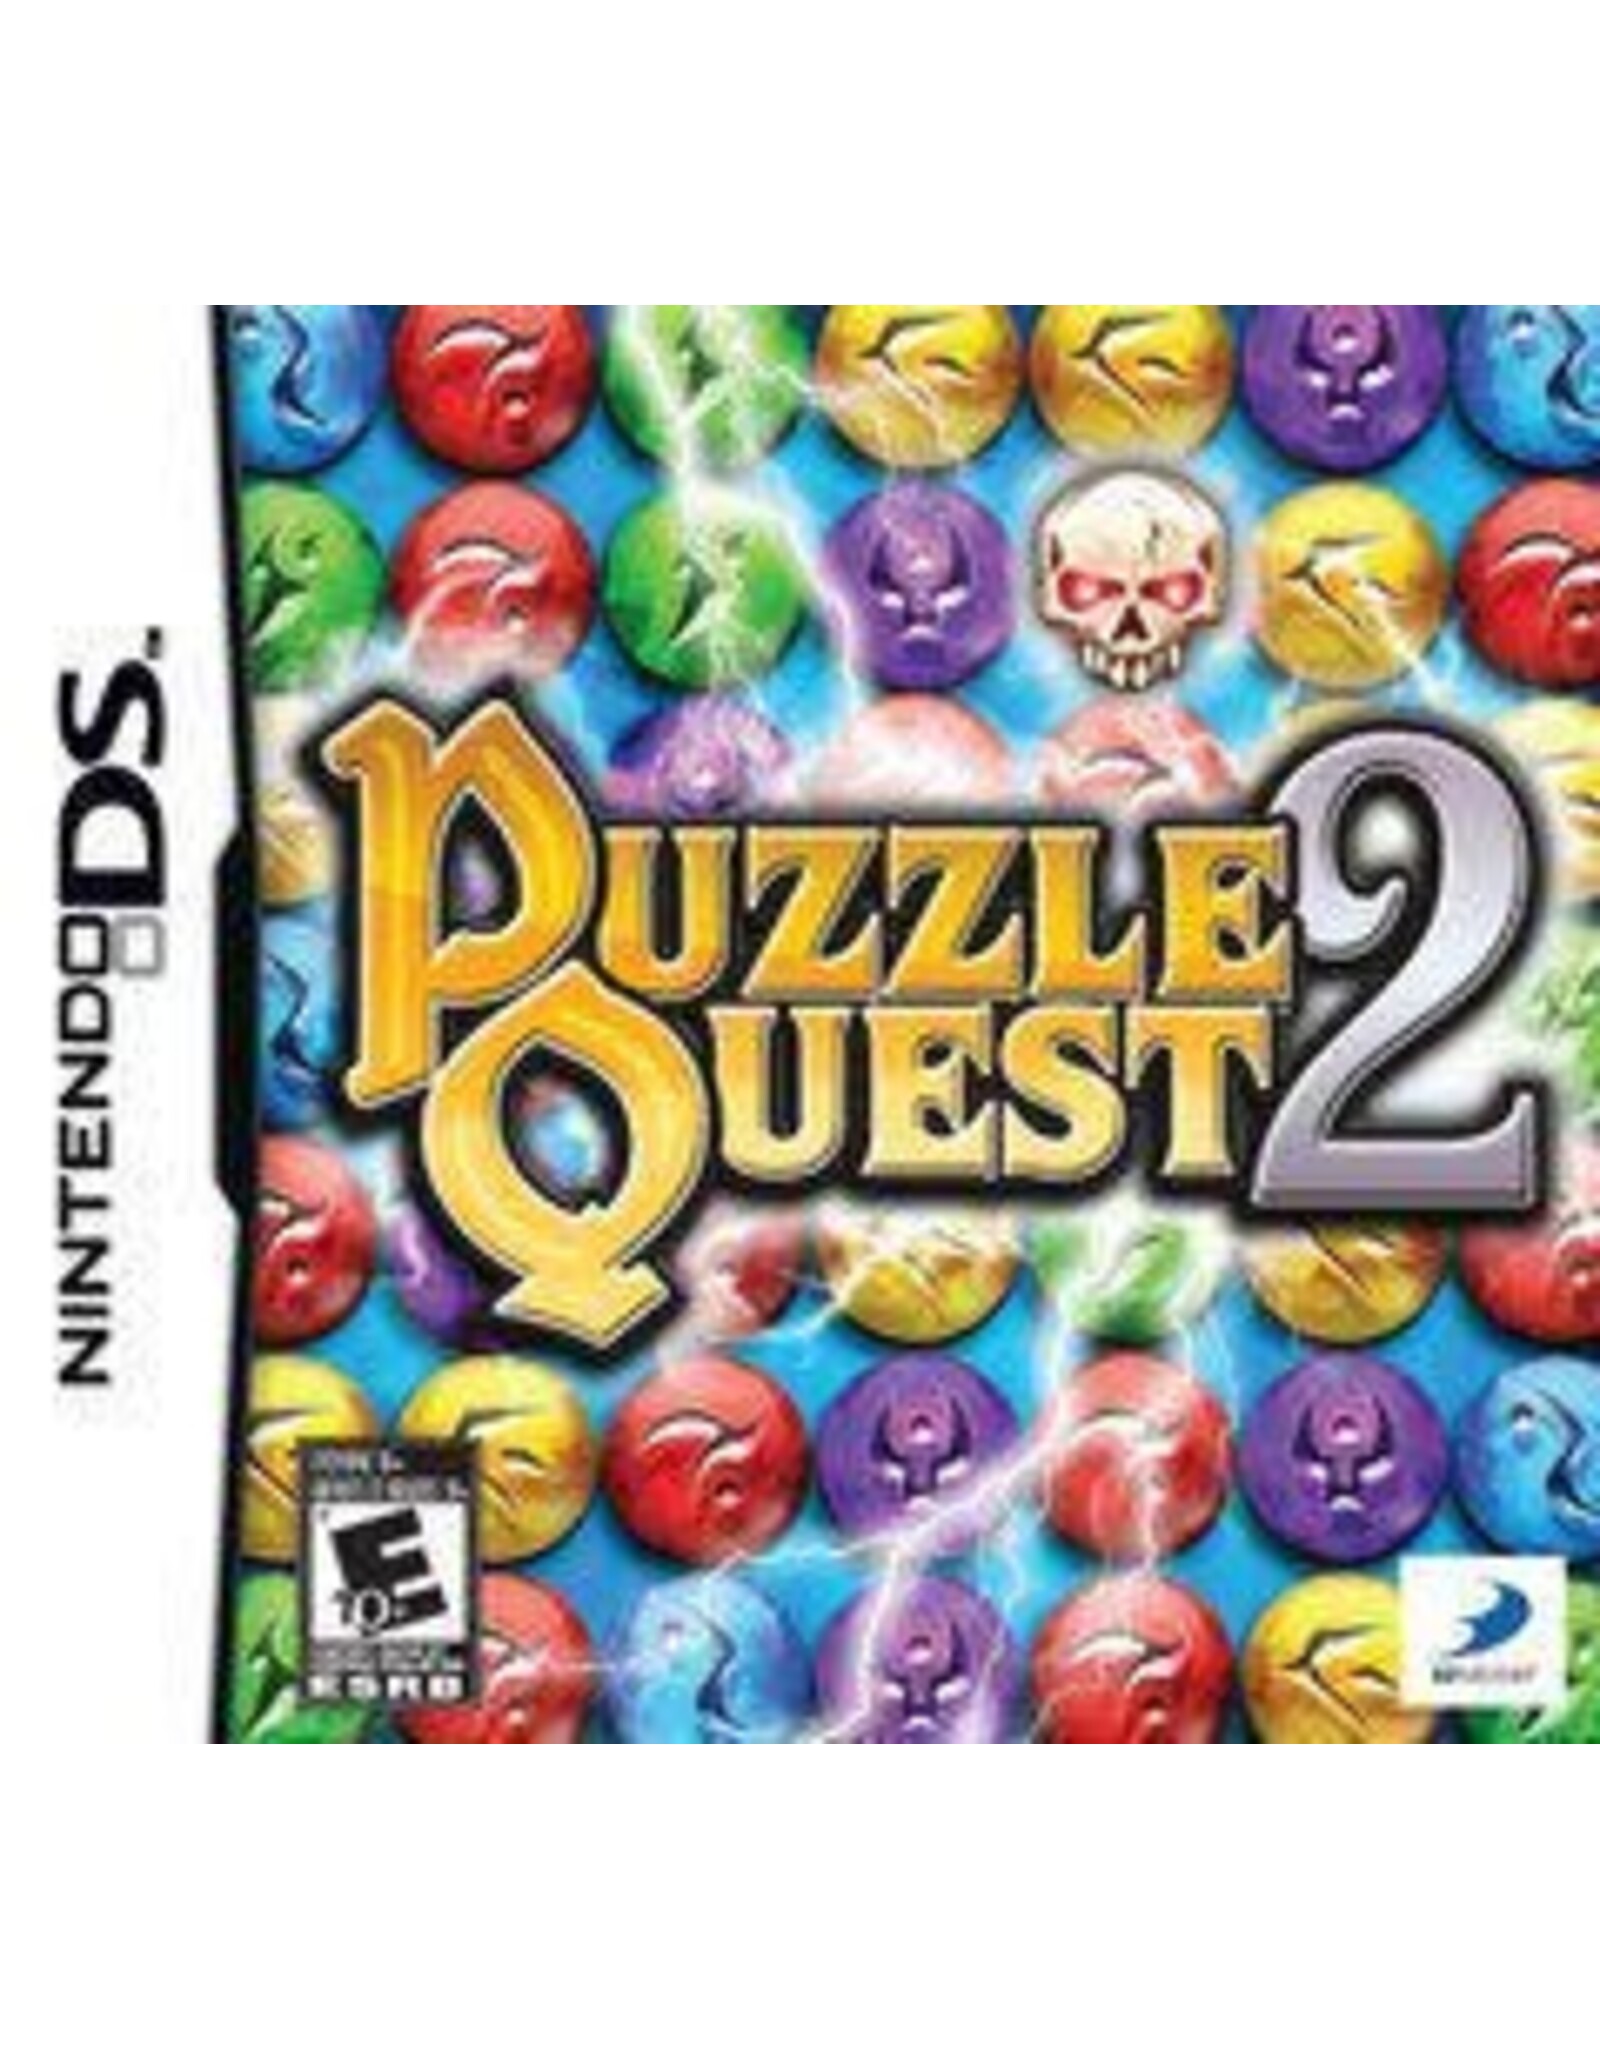 Nintendo DS Puzzle Quest 2 (Used)